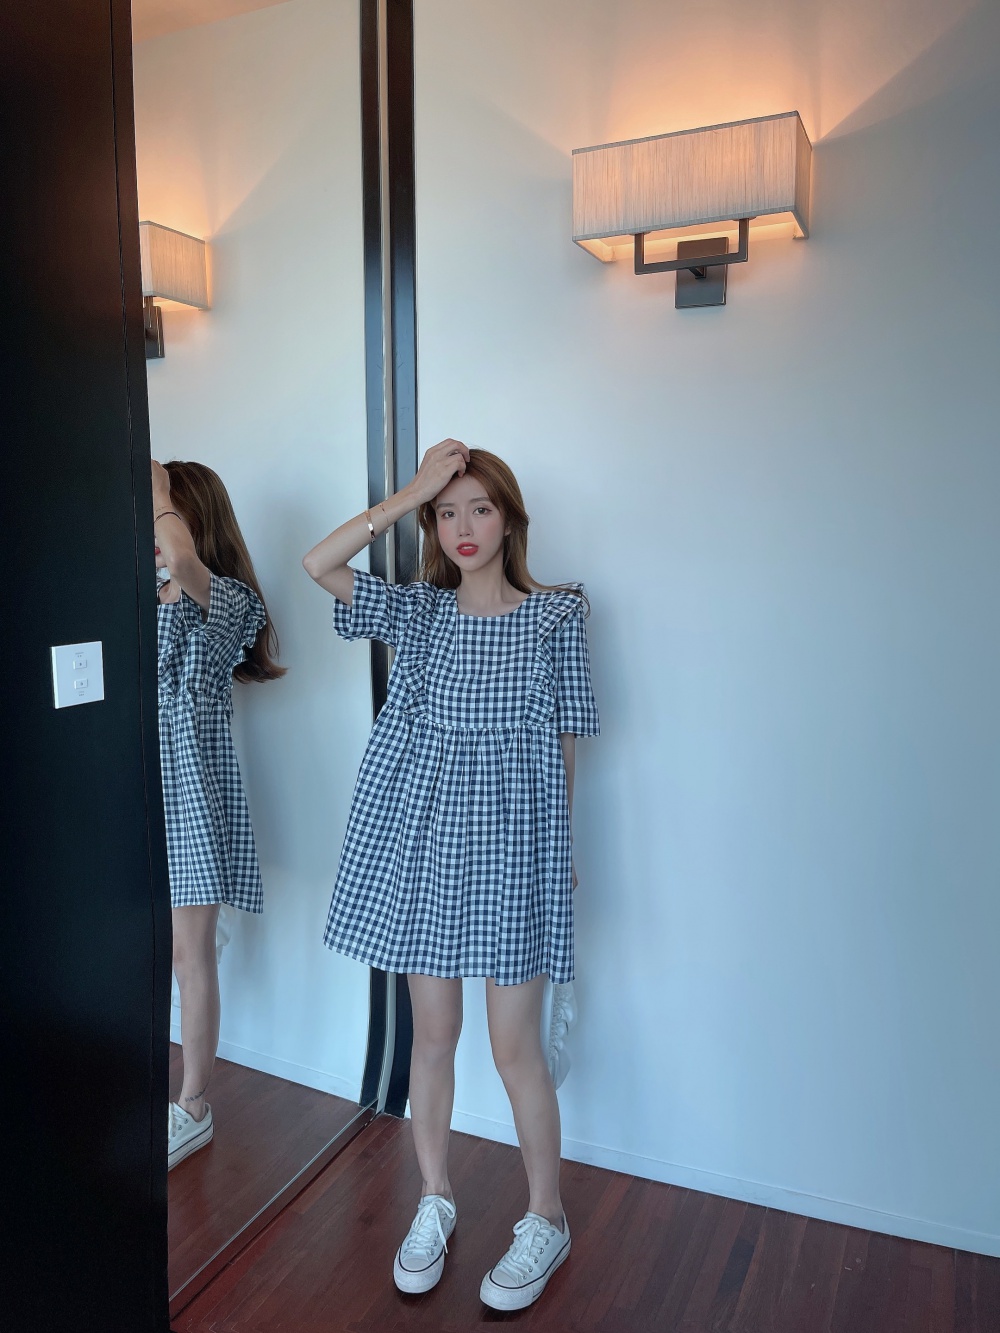 Bow summer Korean style high waist bandage doll dress